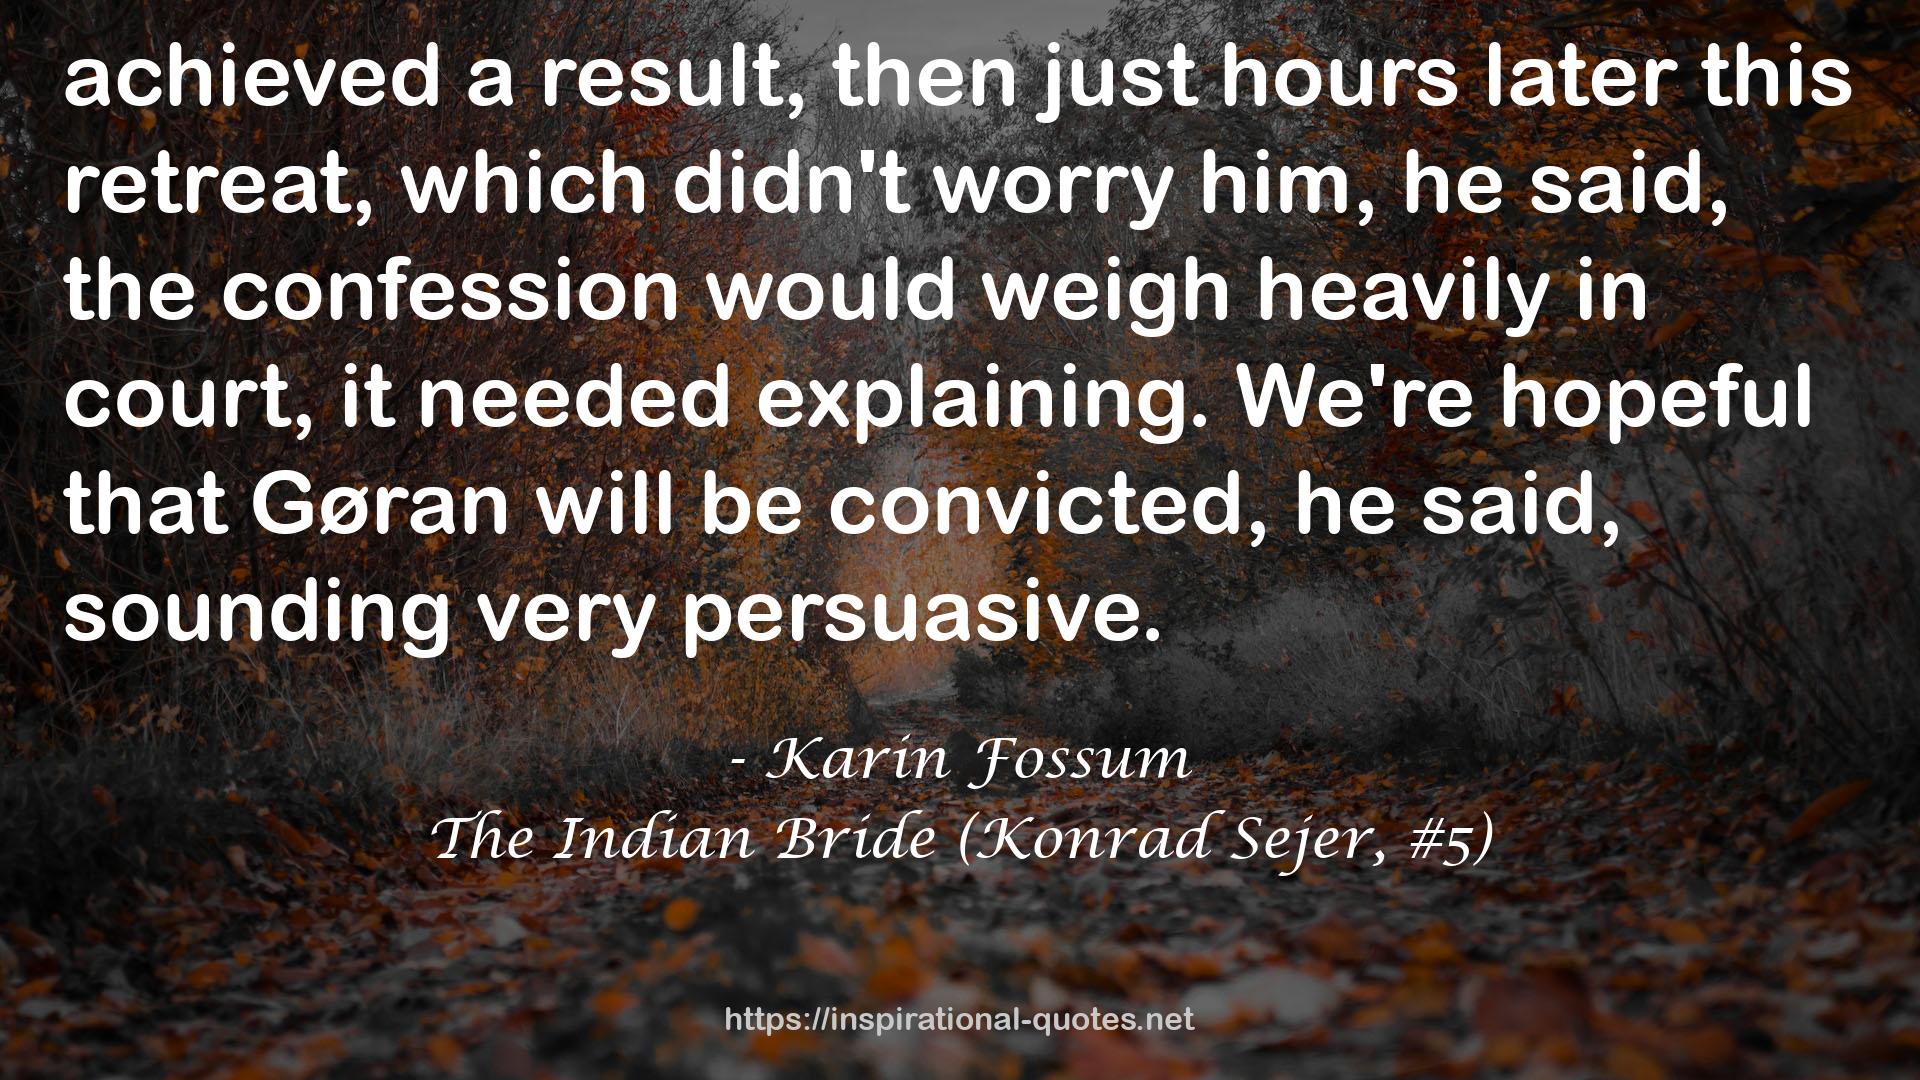 The Indian Bride (Konrad Sejer, #5) QUOTES